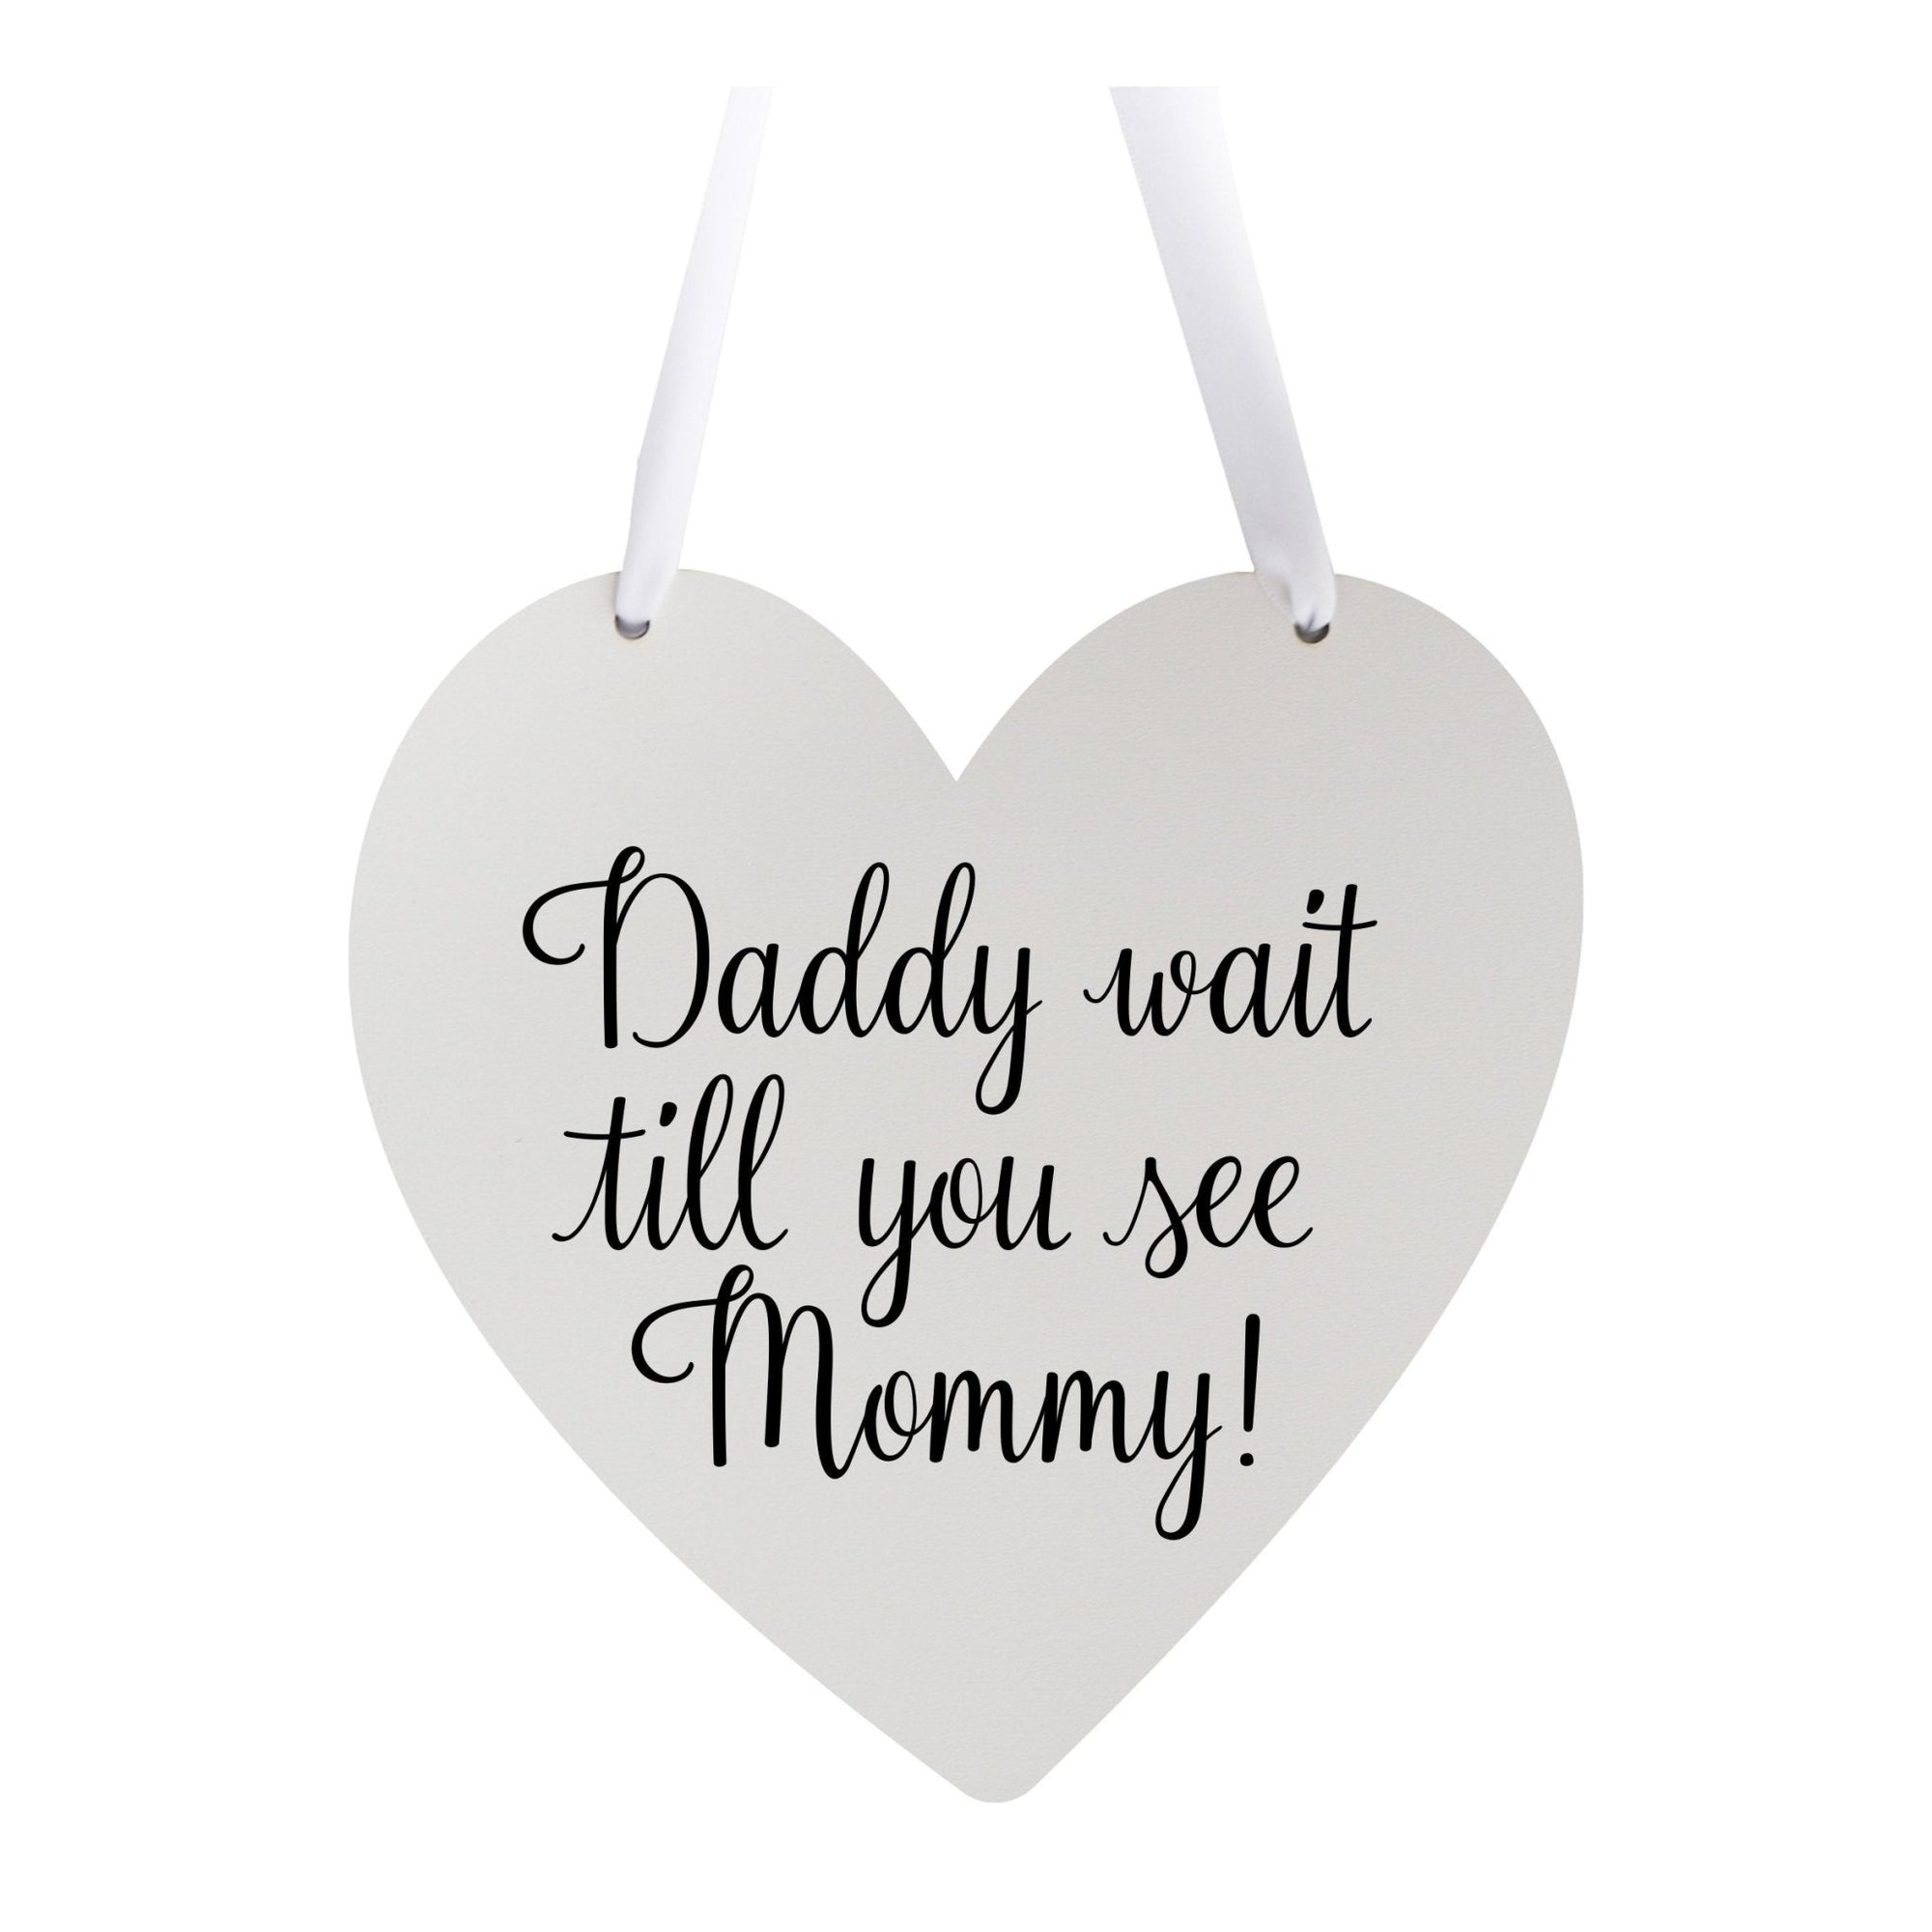 Digitally Printed Wedding Pet Heart Signs - Daddy Wait - LifeSong Milestones